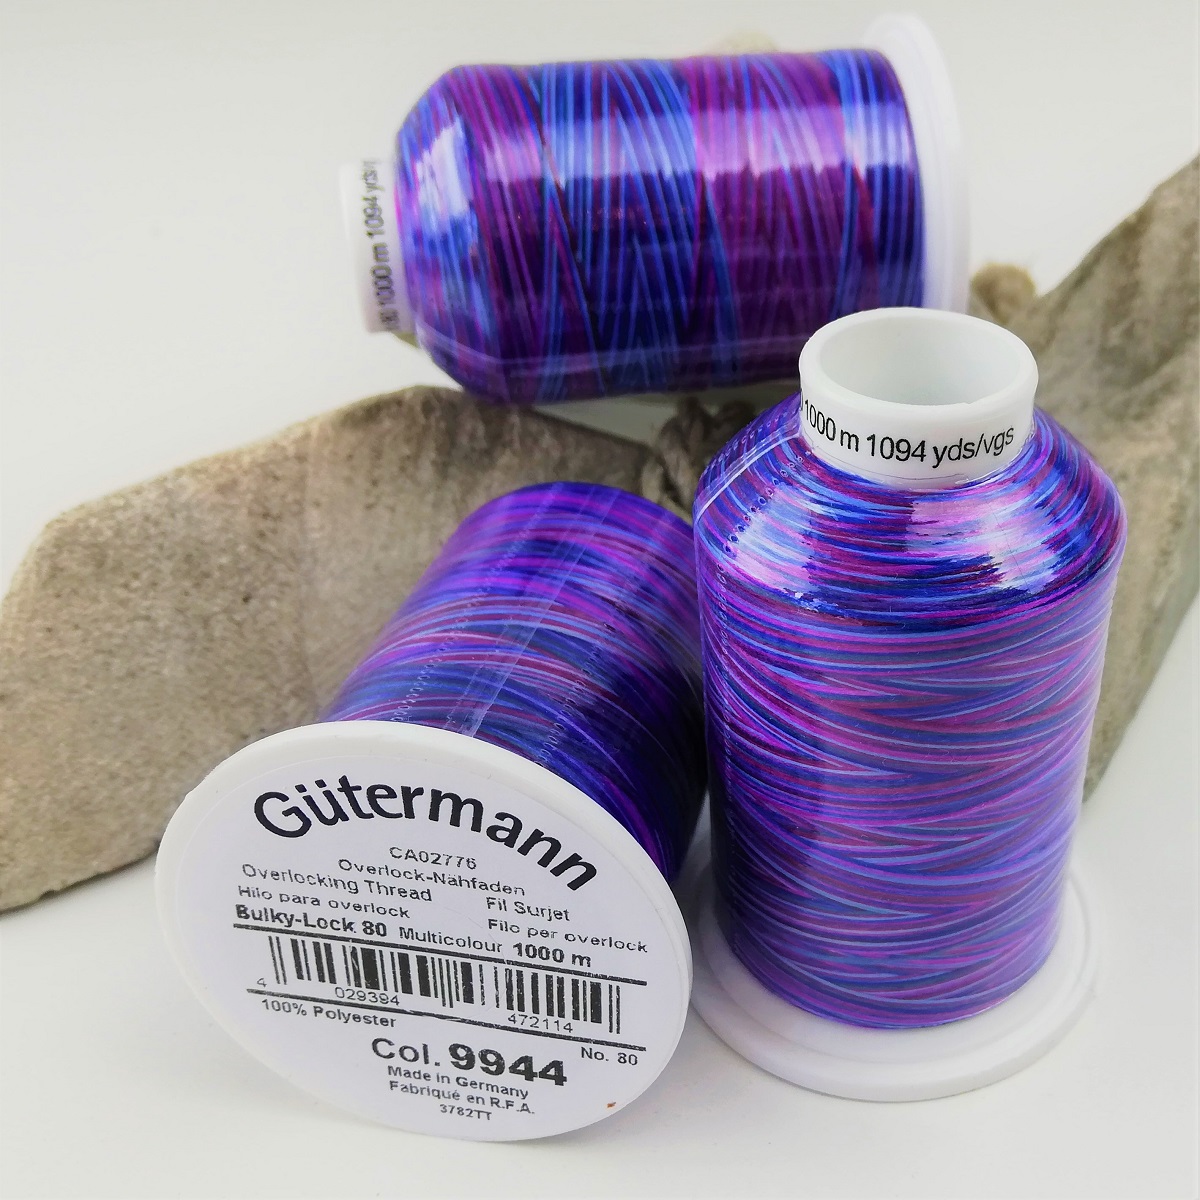 Gütermann Bauschgarn Bulky-Lock 80 Multicolor "purple" 9944, 1000m